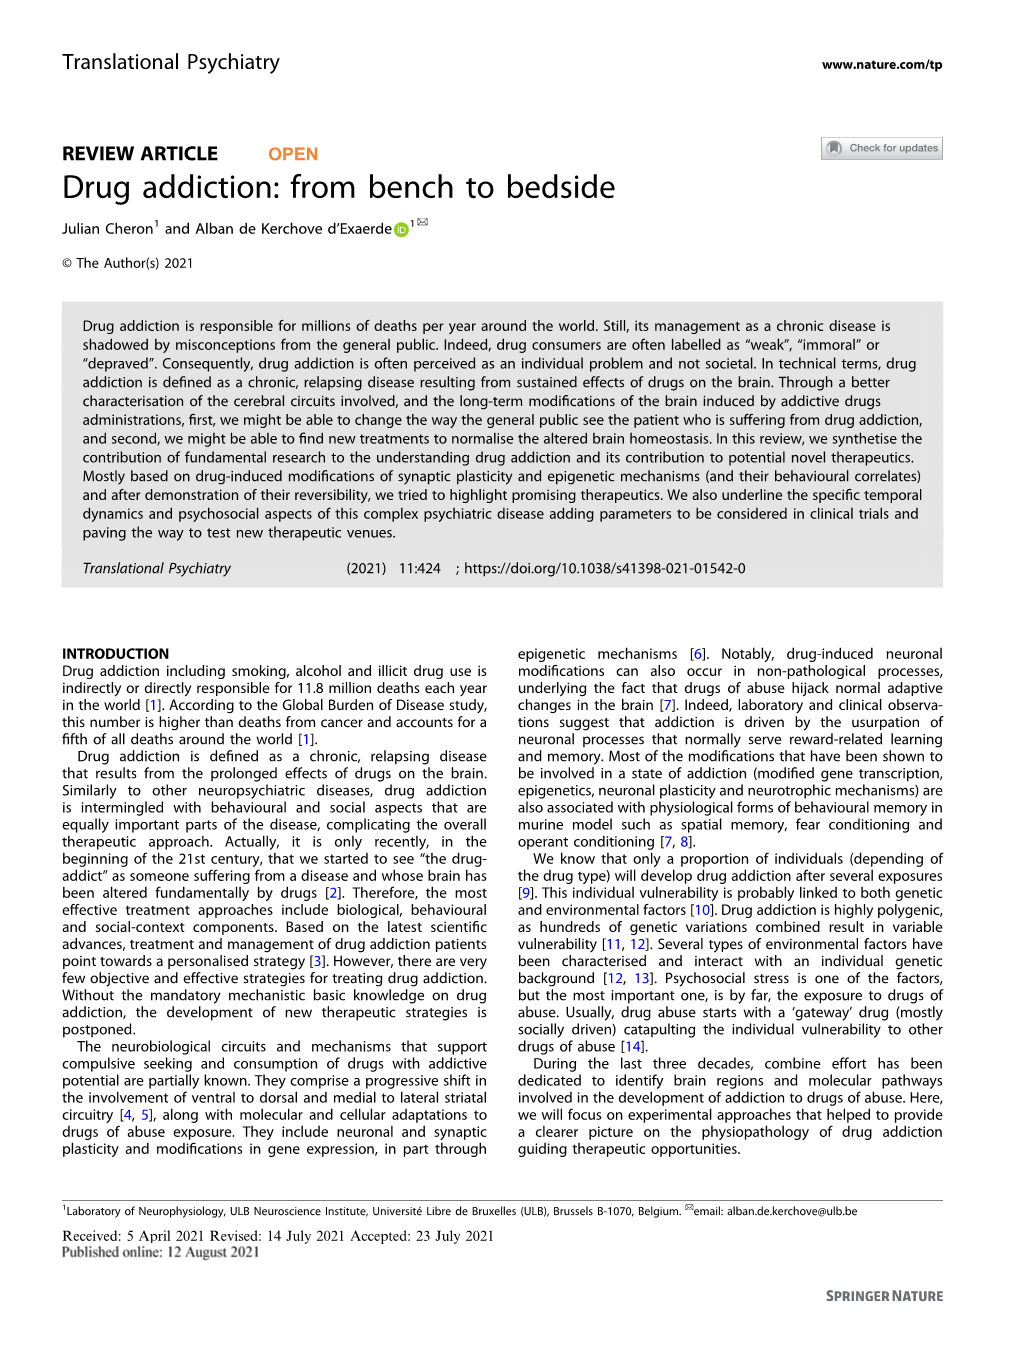 Drug Addiction: from Bench to Bedside ✉ Julian Cheron1 and Alban De Kerchove D’Exaerde 1